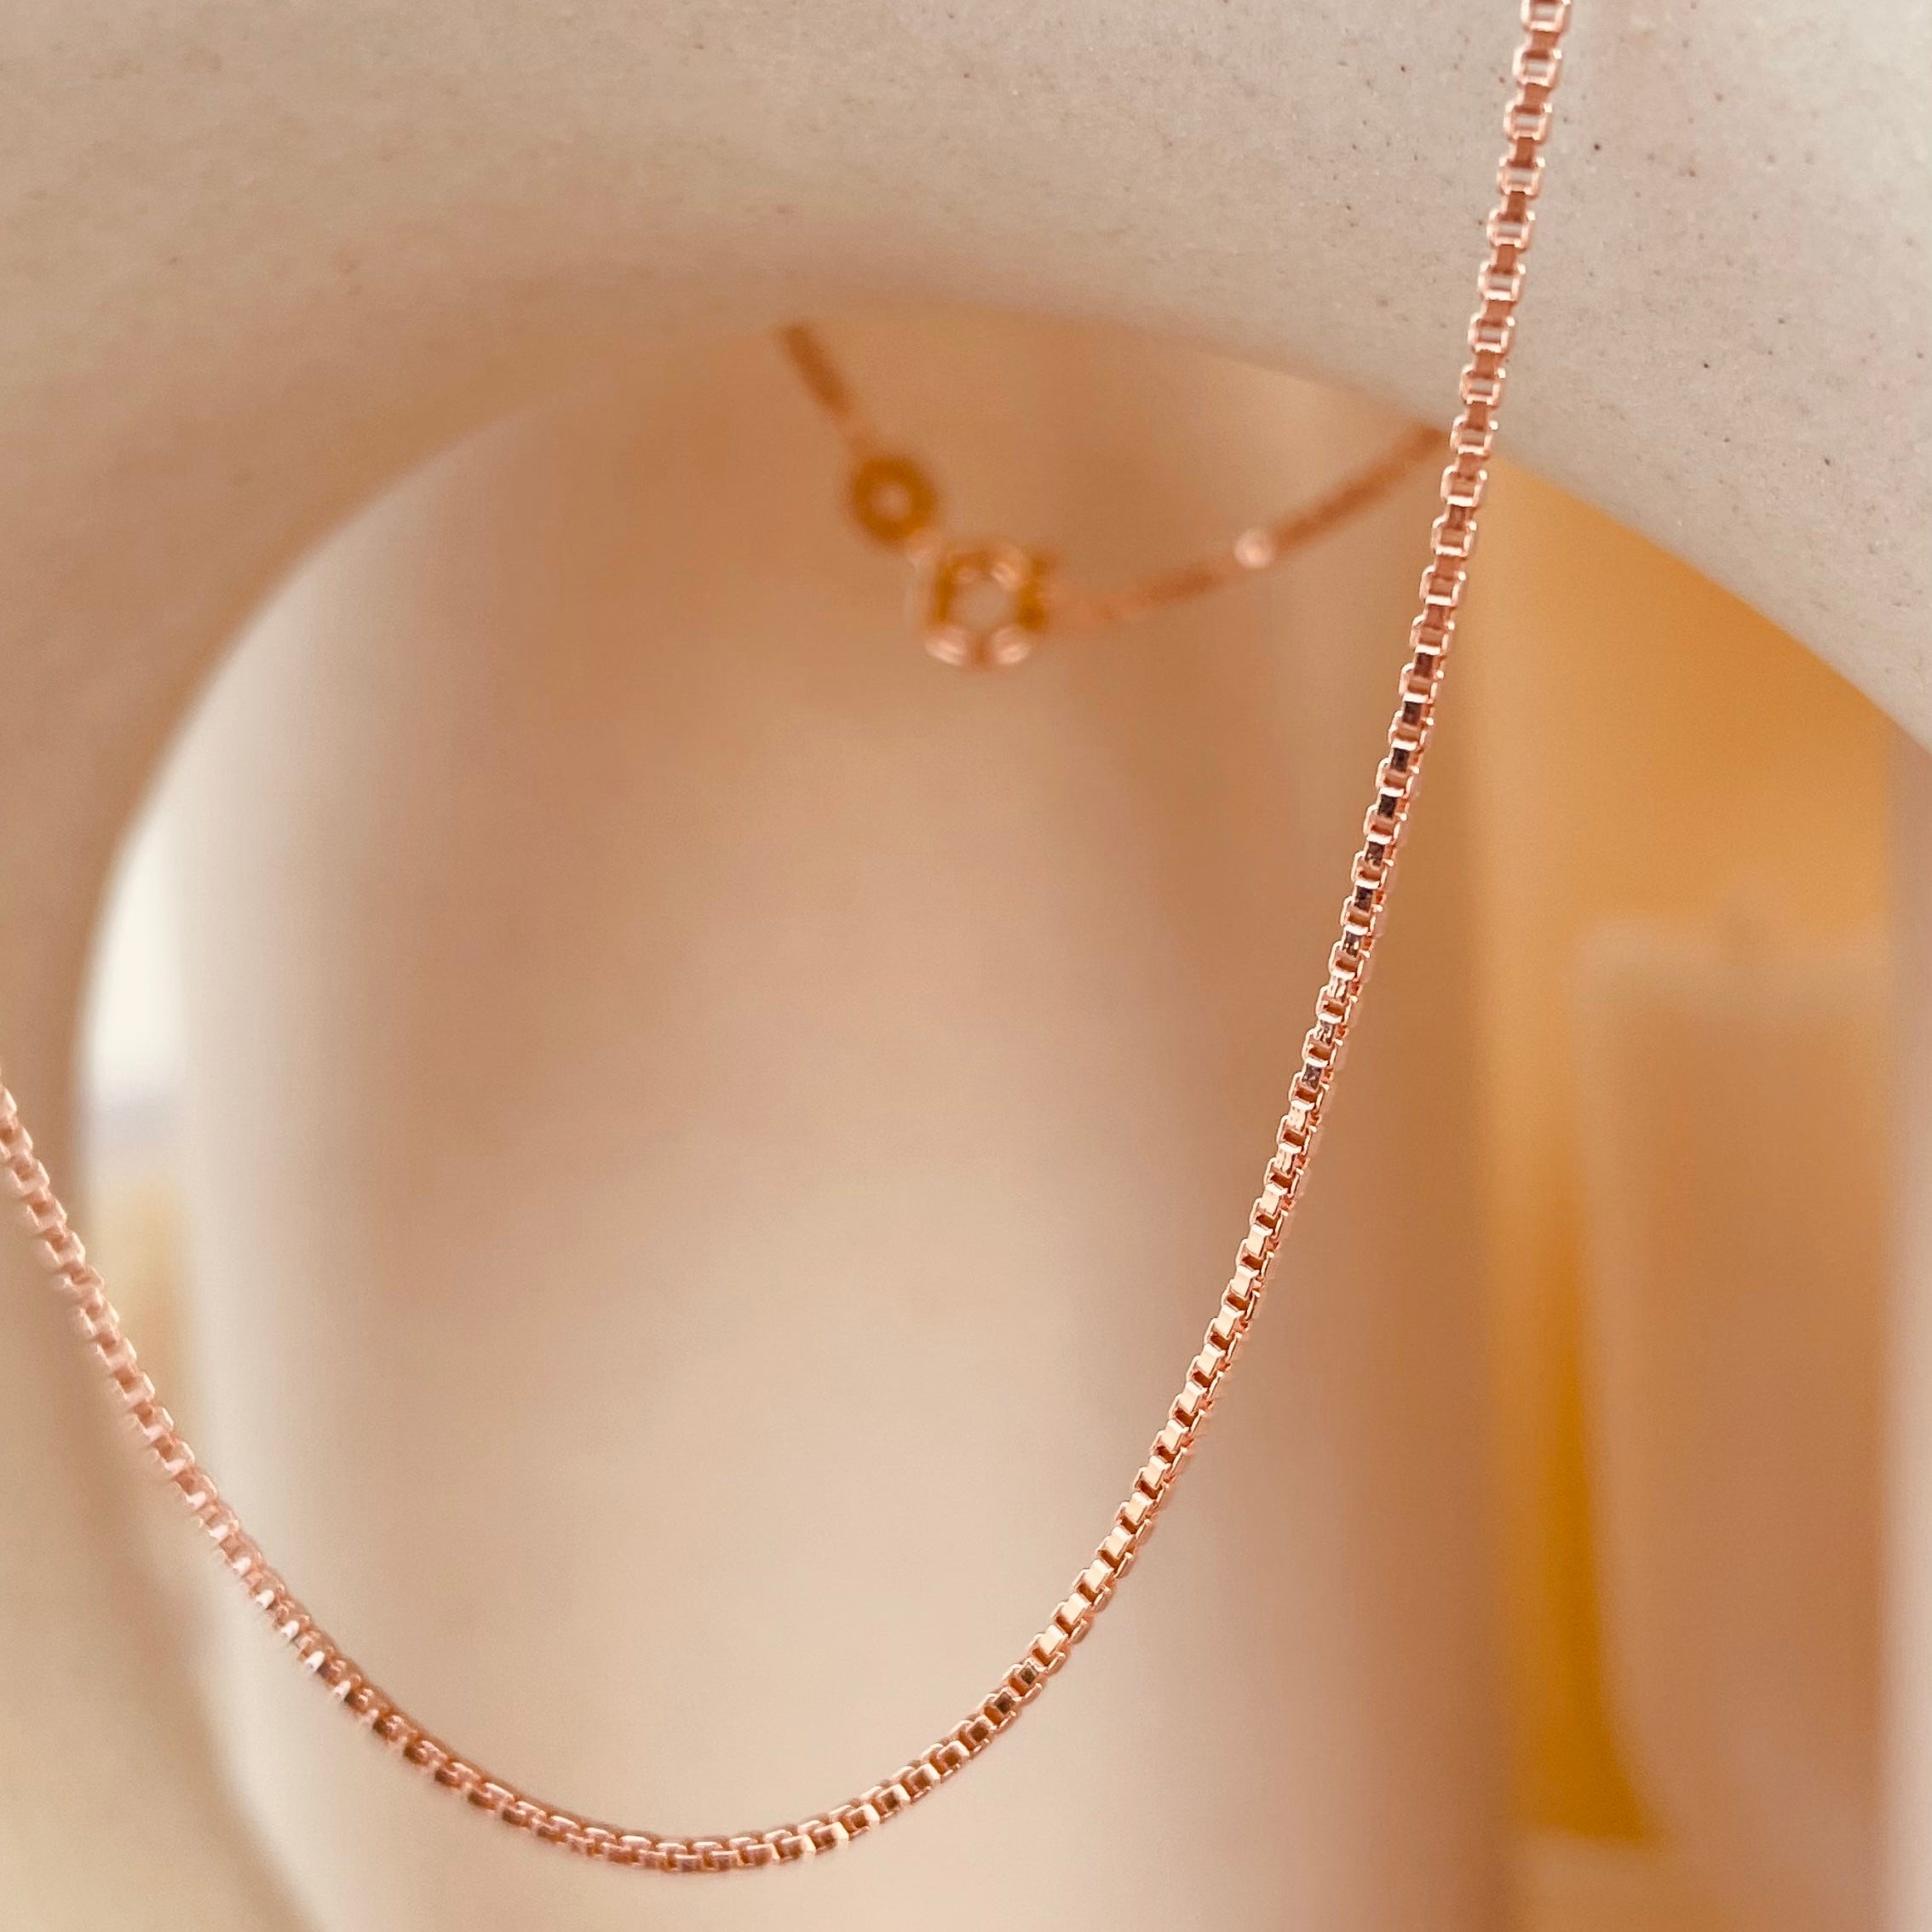 Gold Box Chain Necklace - Octonov 